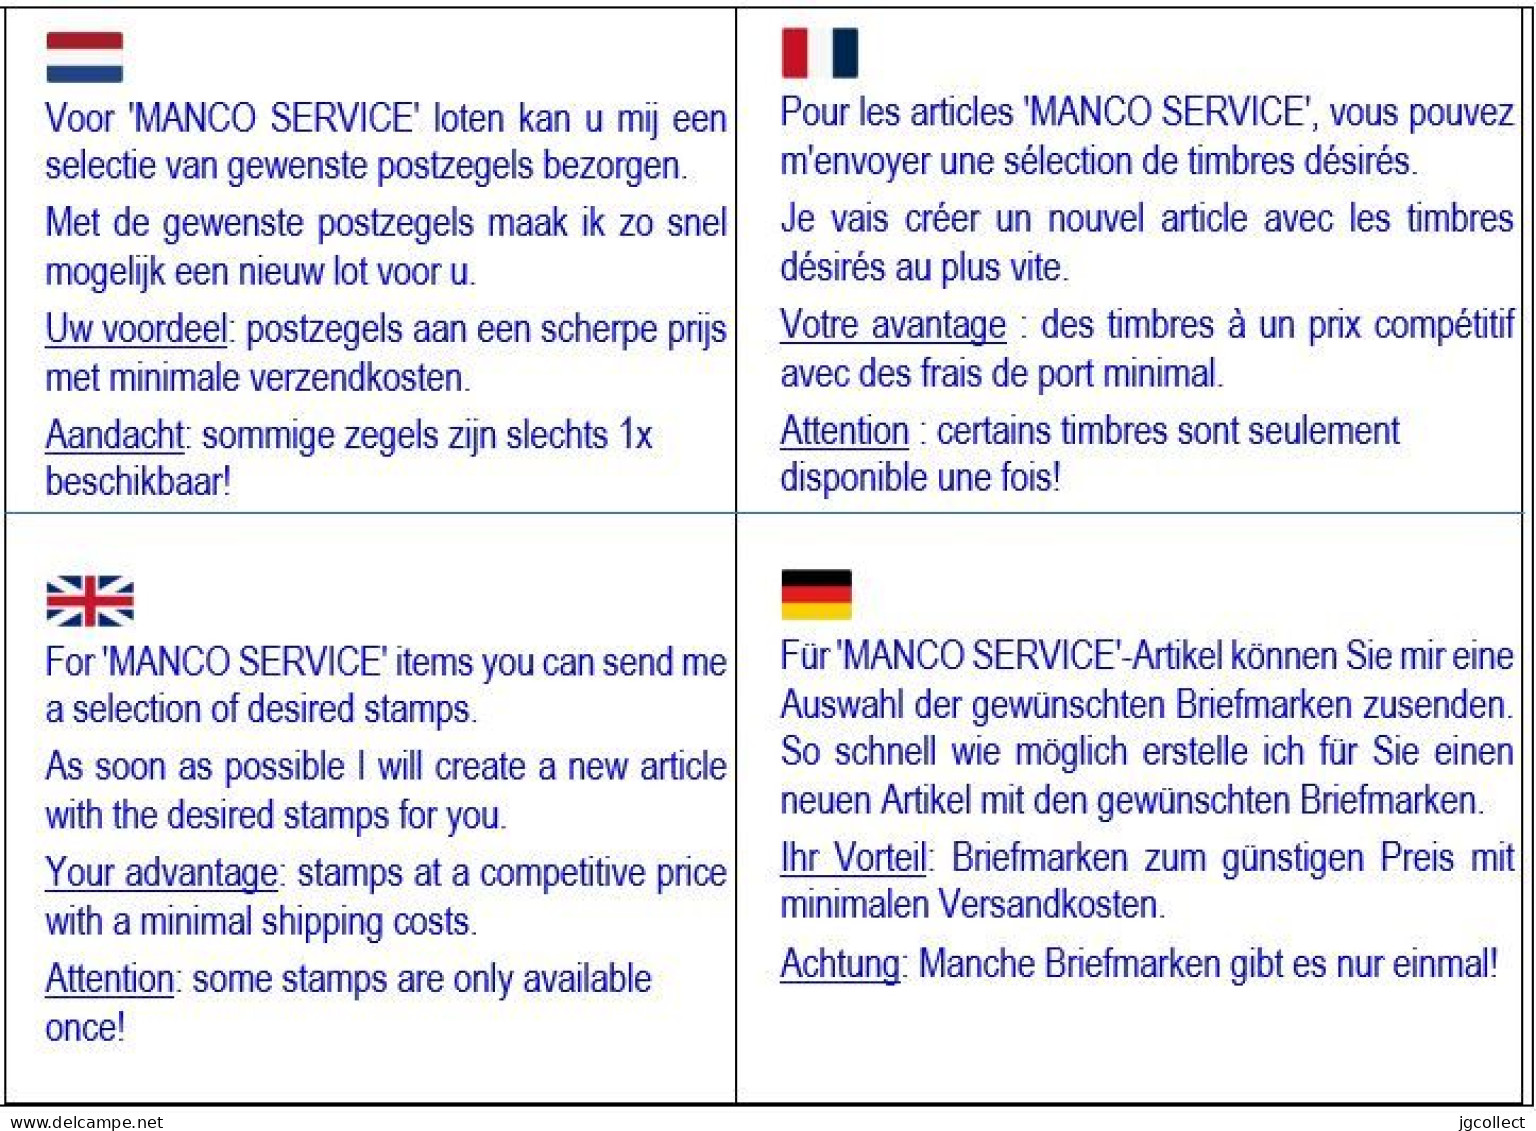 MANCO Service: Typografisch 1922-26 Albert I - Typos 1922-26 (Albert I)